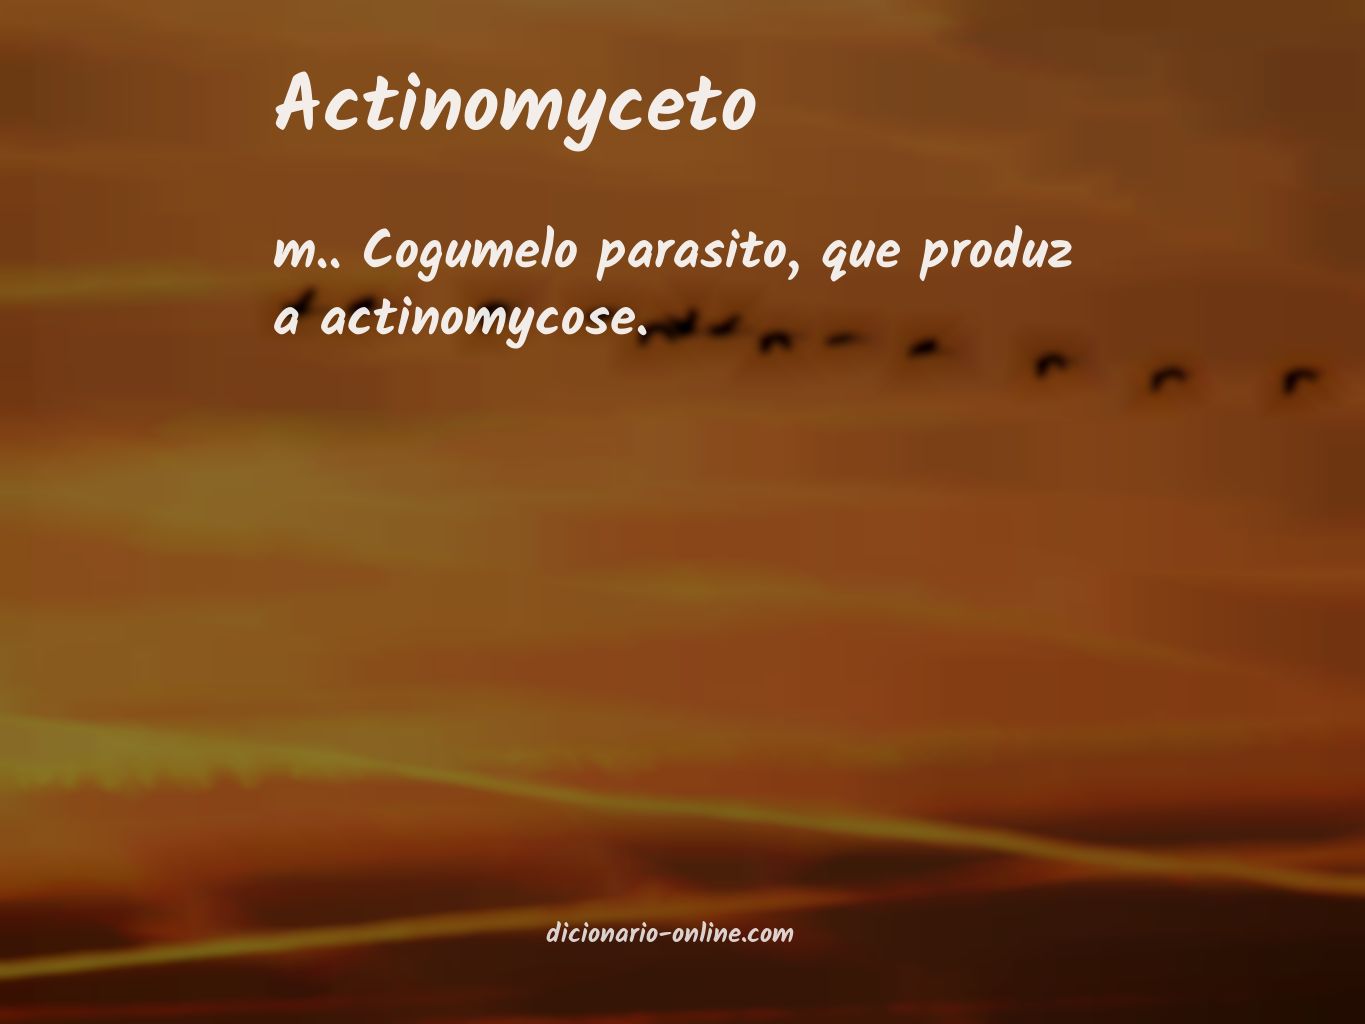 Significado de actinomyceto